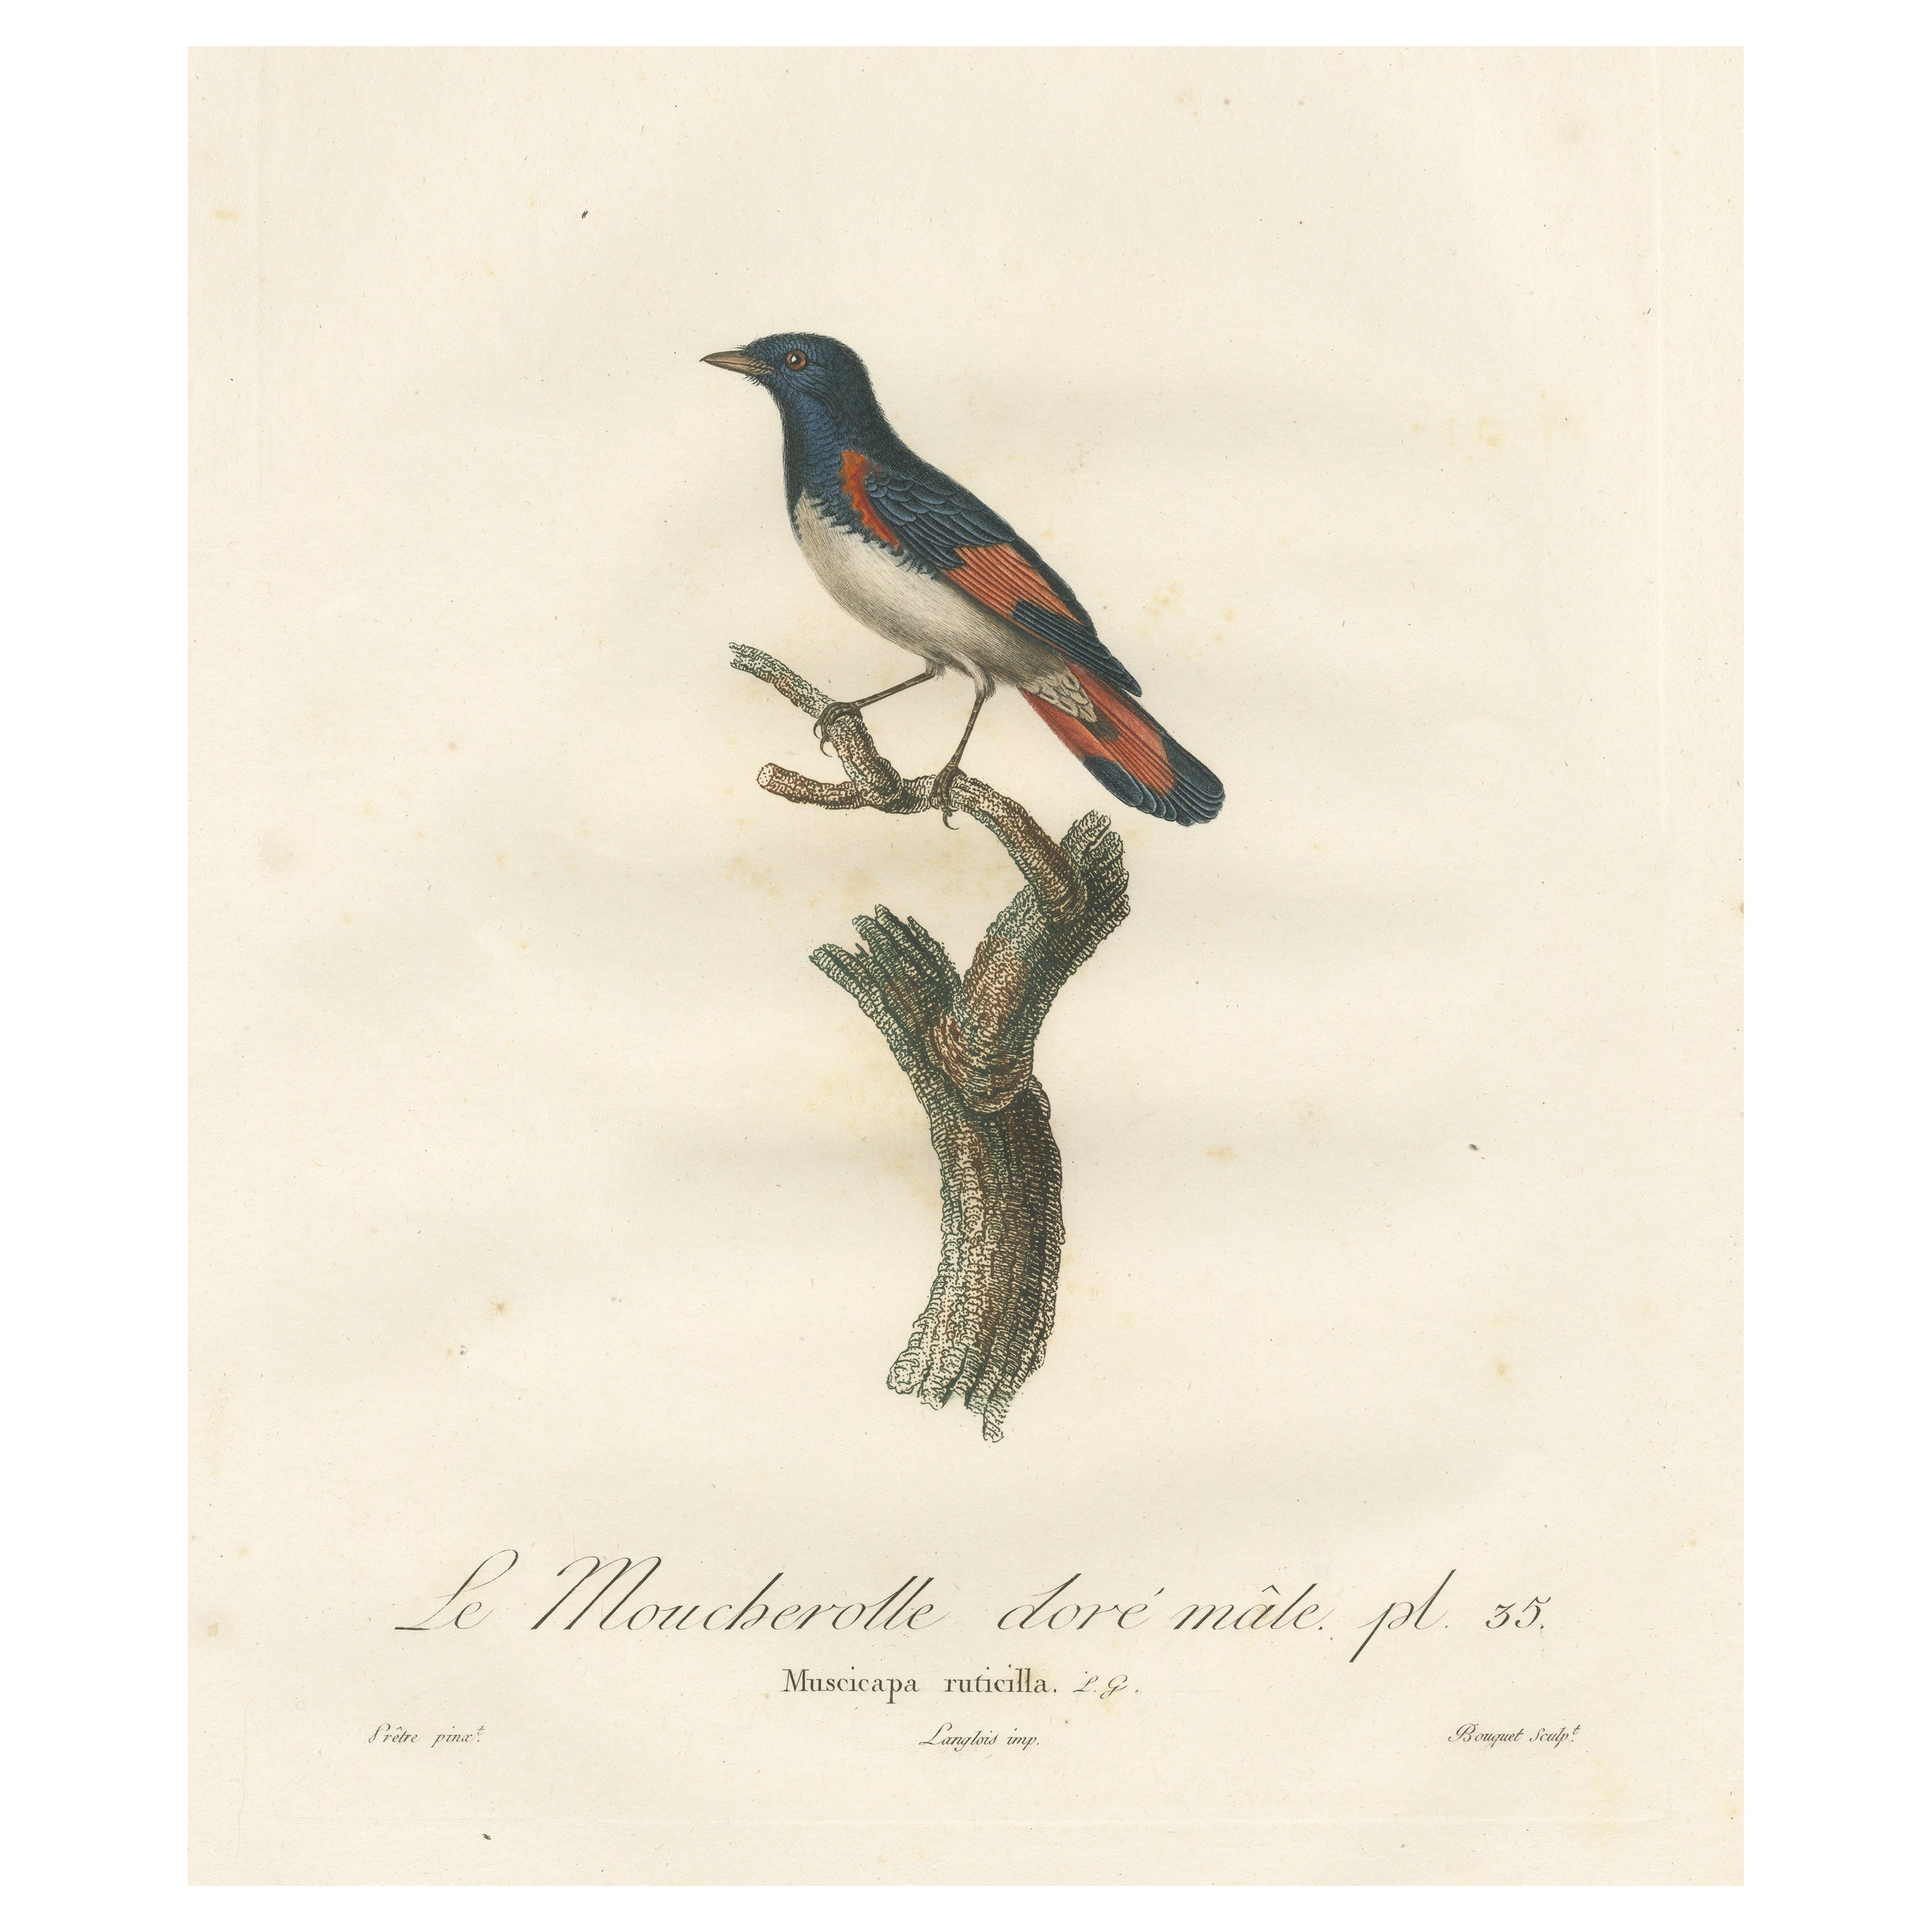 1807 American Redstart Illustration - 'Le Moucherolle doré mâle' Old Bird Print